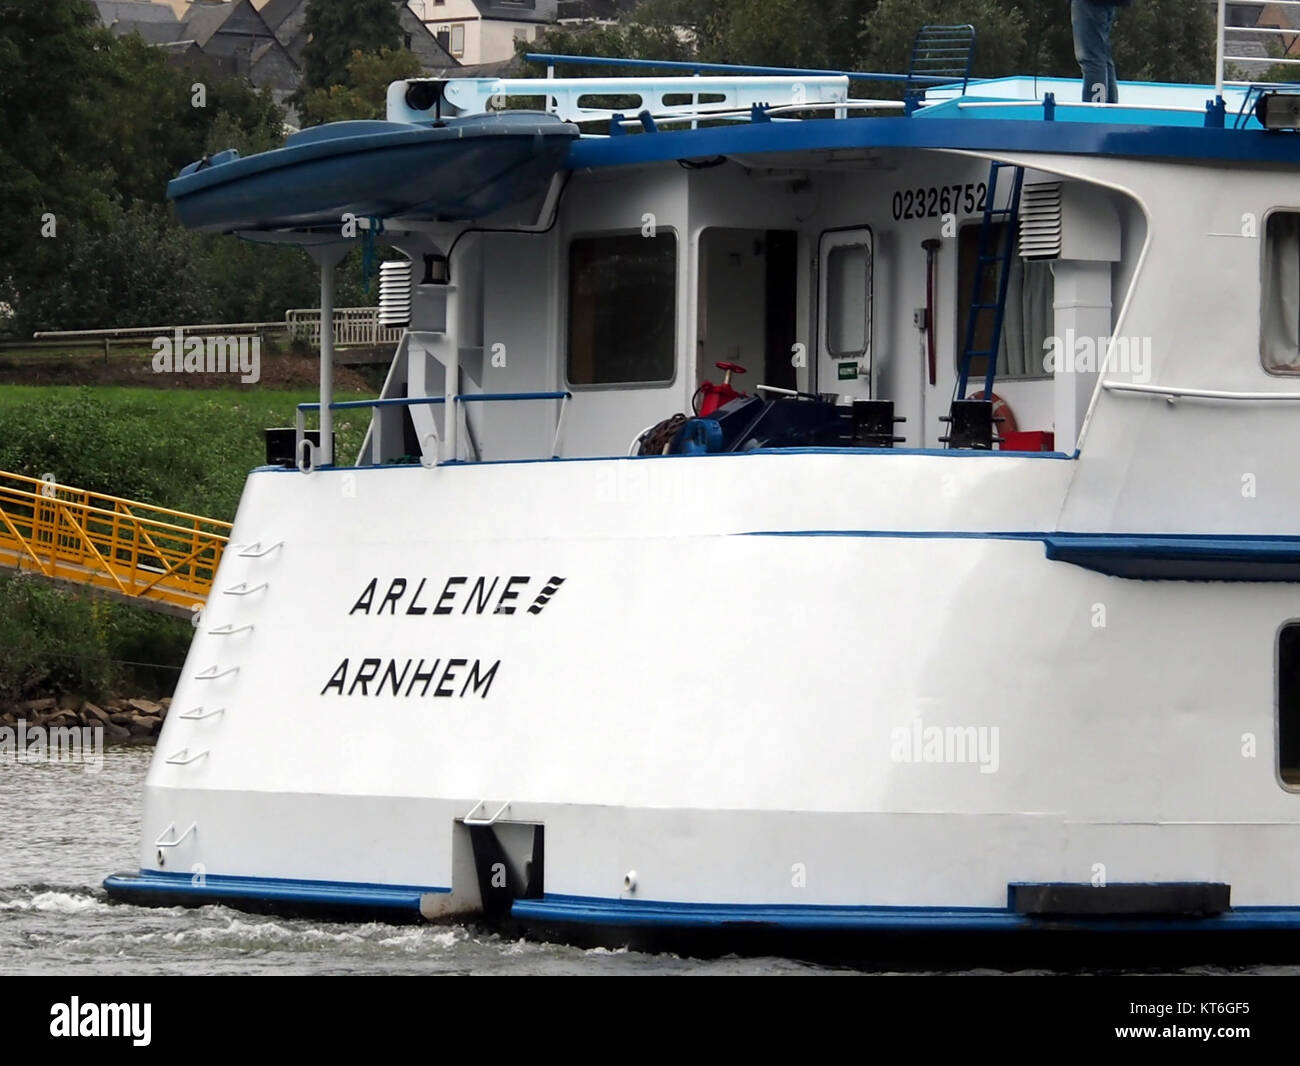 Arlene, ENI 02326752 at he Moselle river, photo 3 Stock Photo